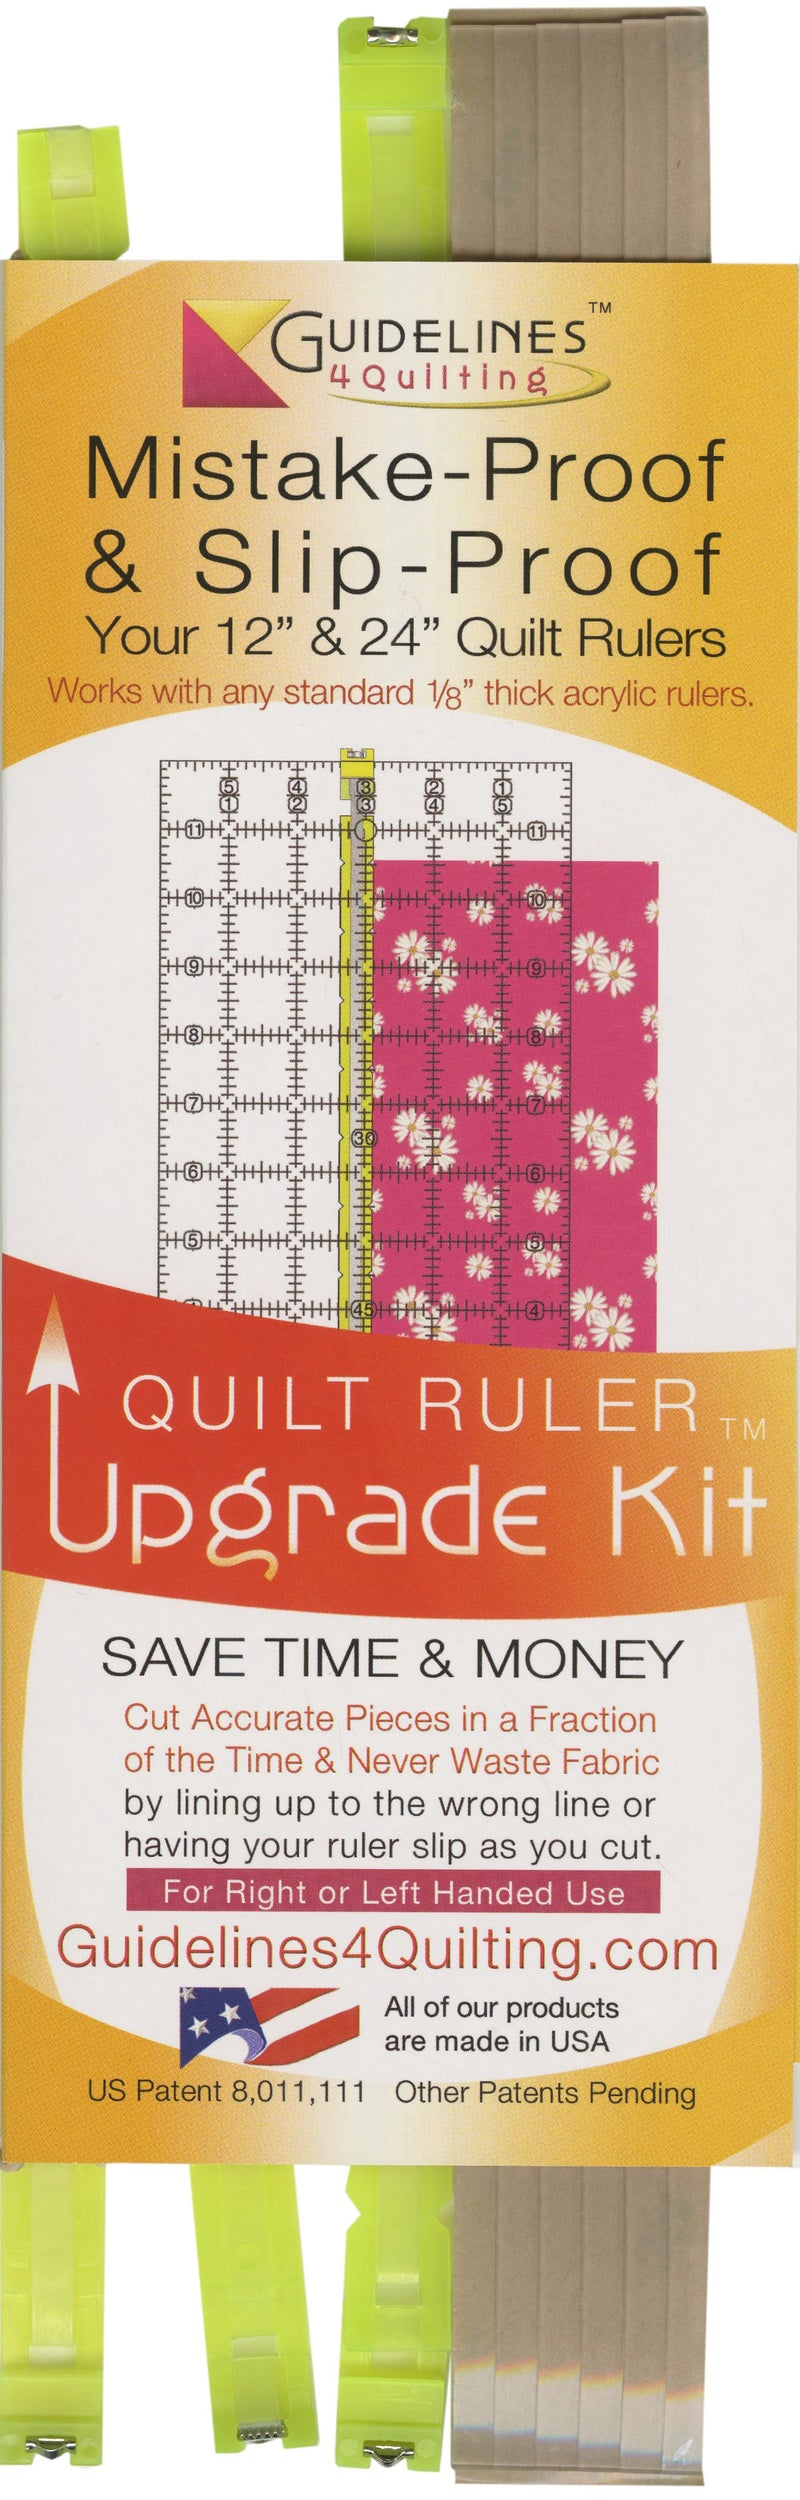 Guidelines Quilt Ruler Upgrade Kit